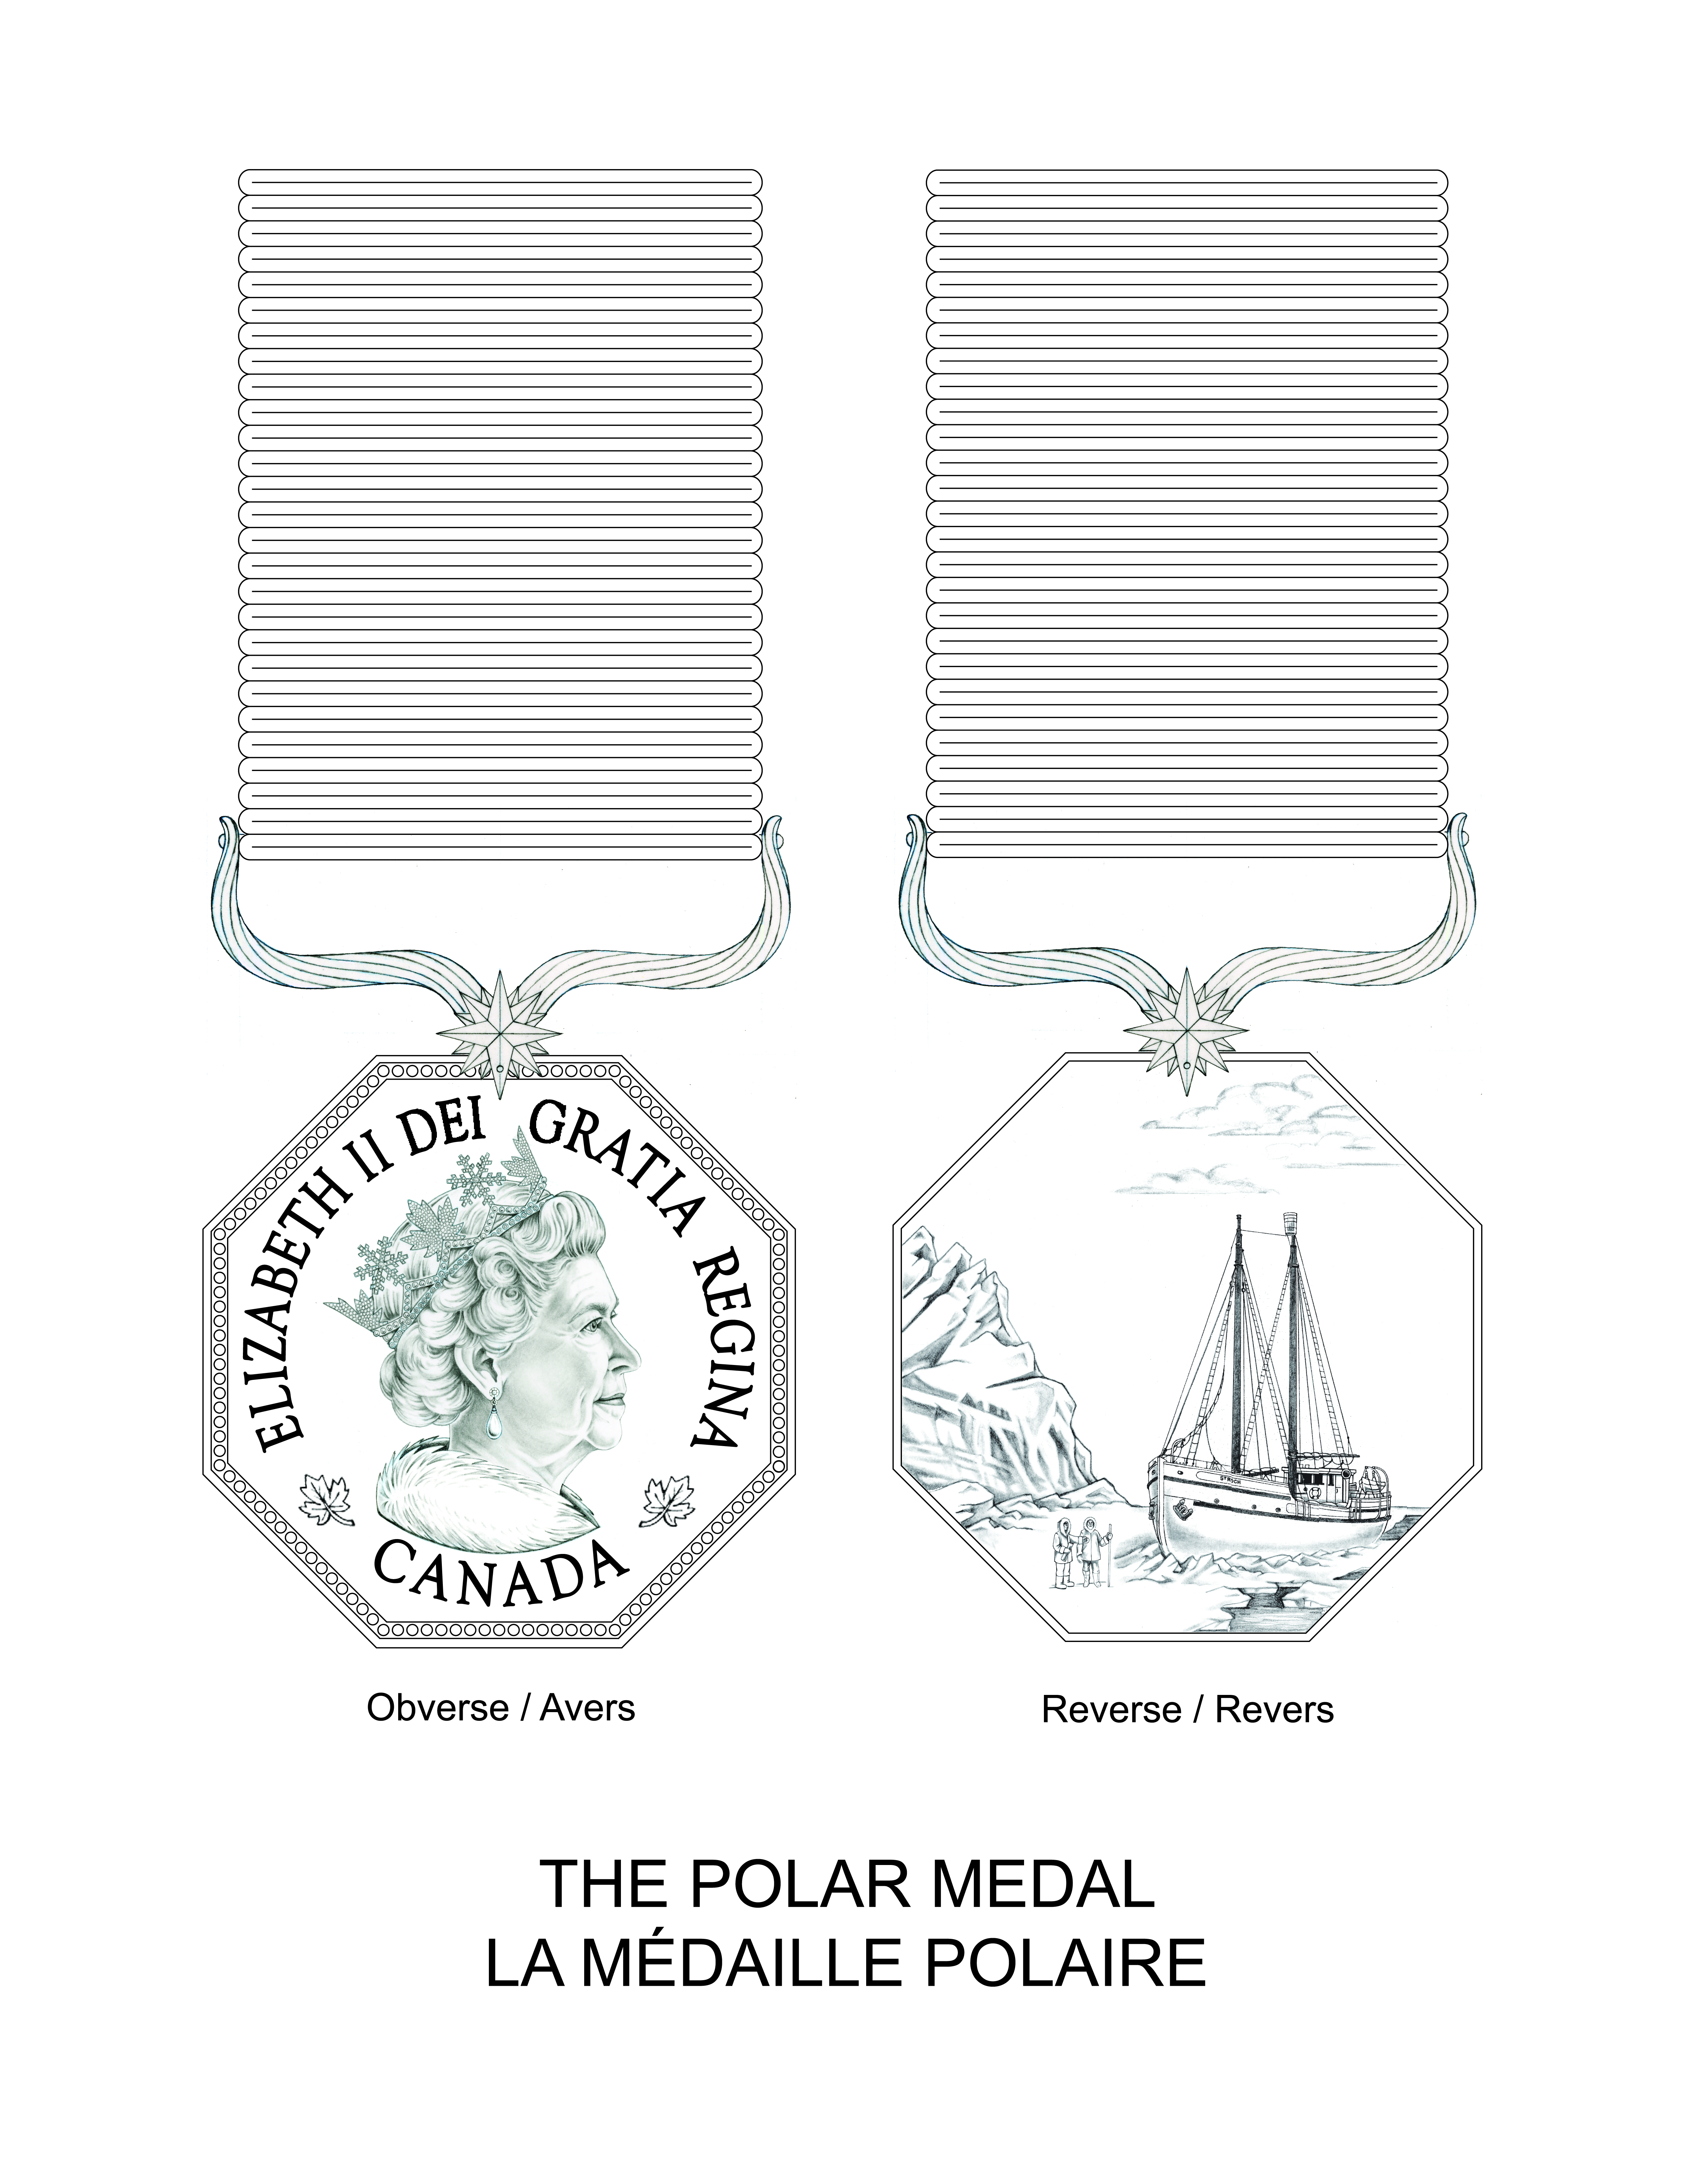 Canada's Polar Medal design. (Governor General of Canada)